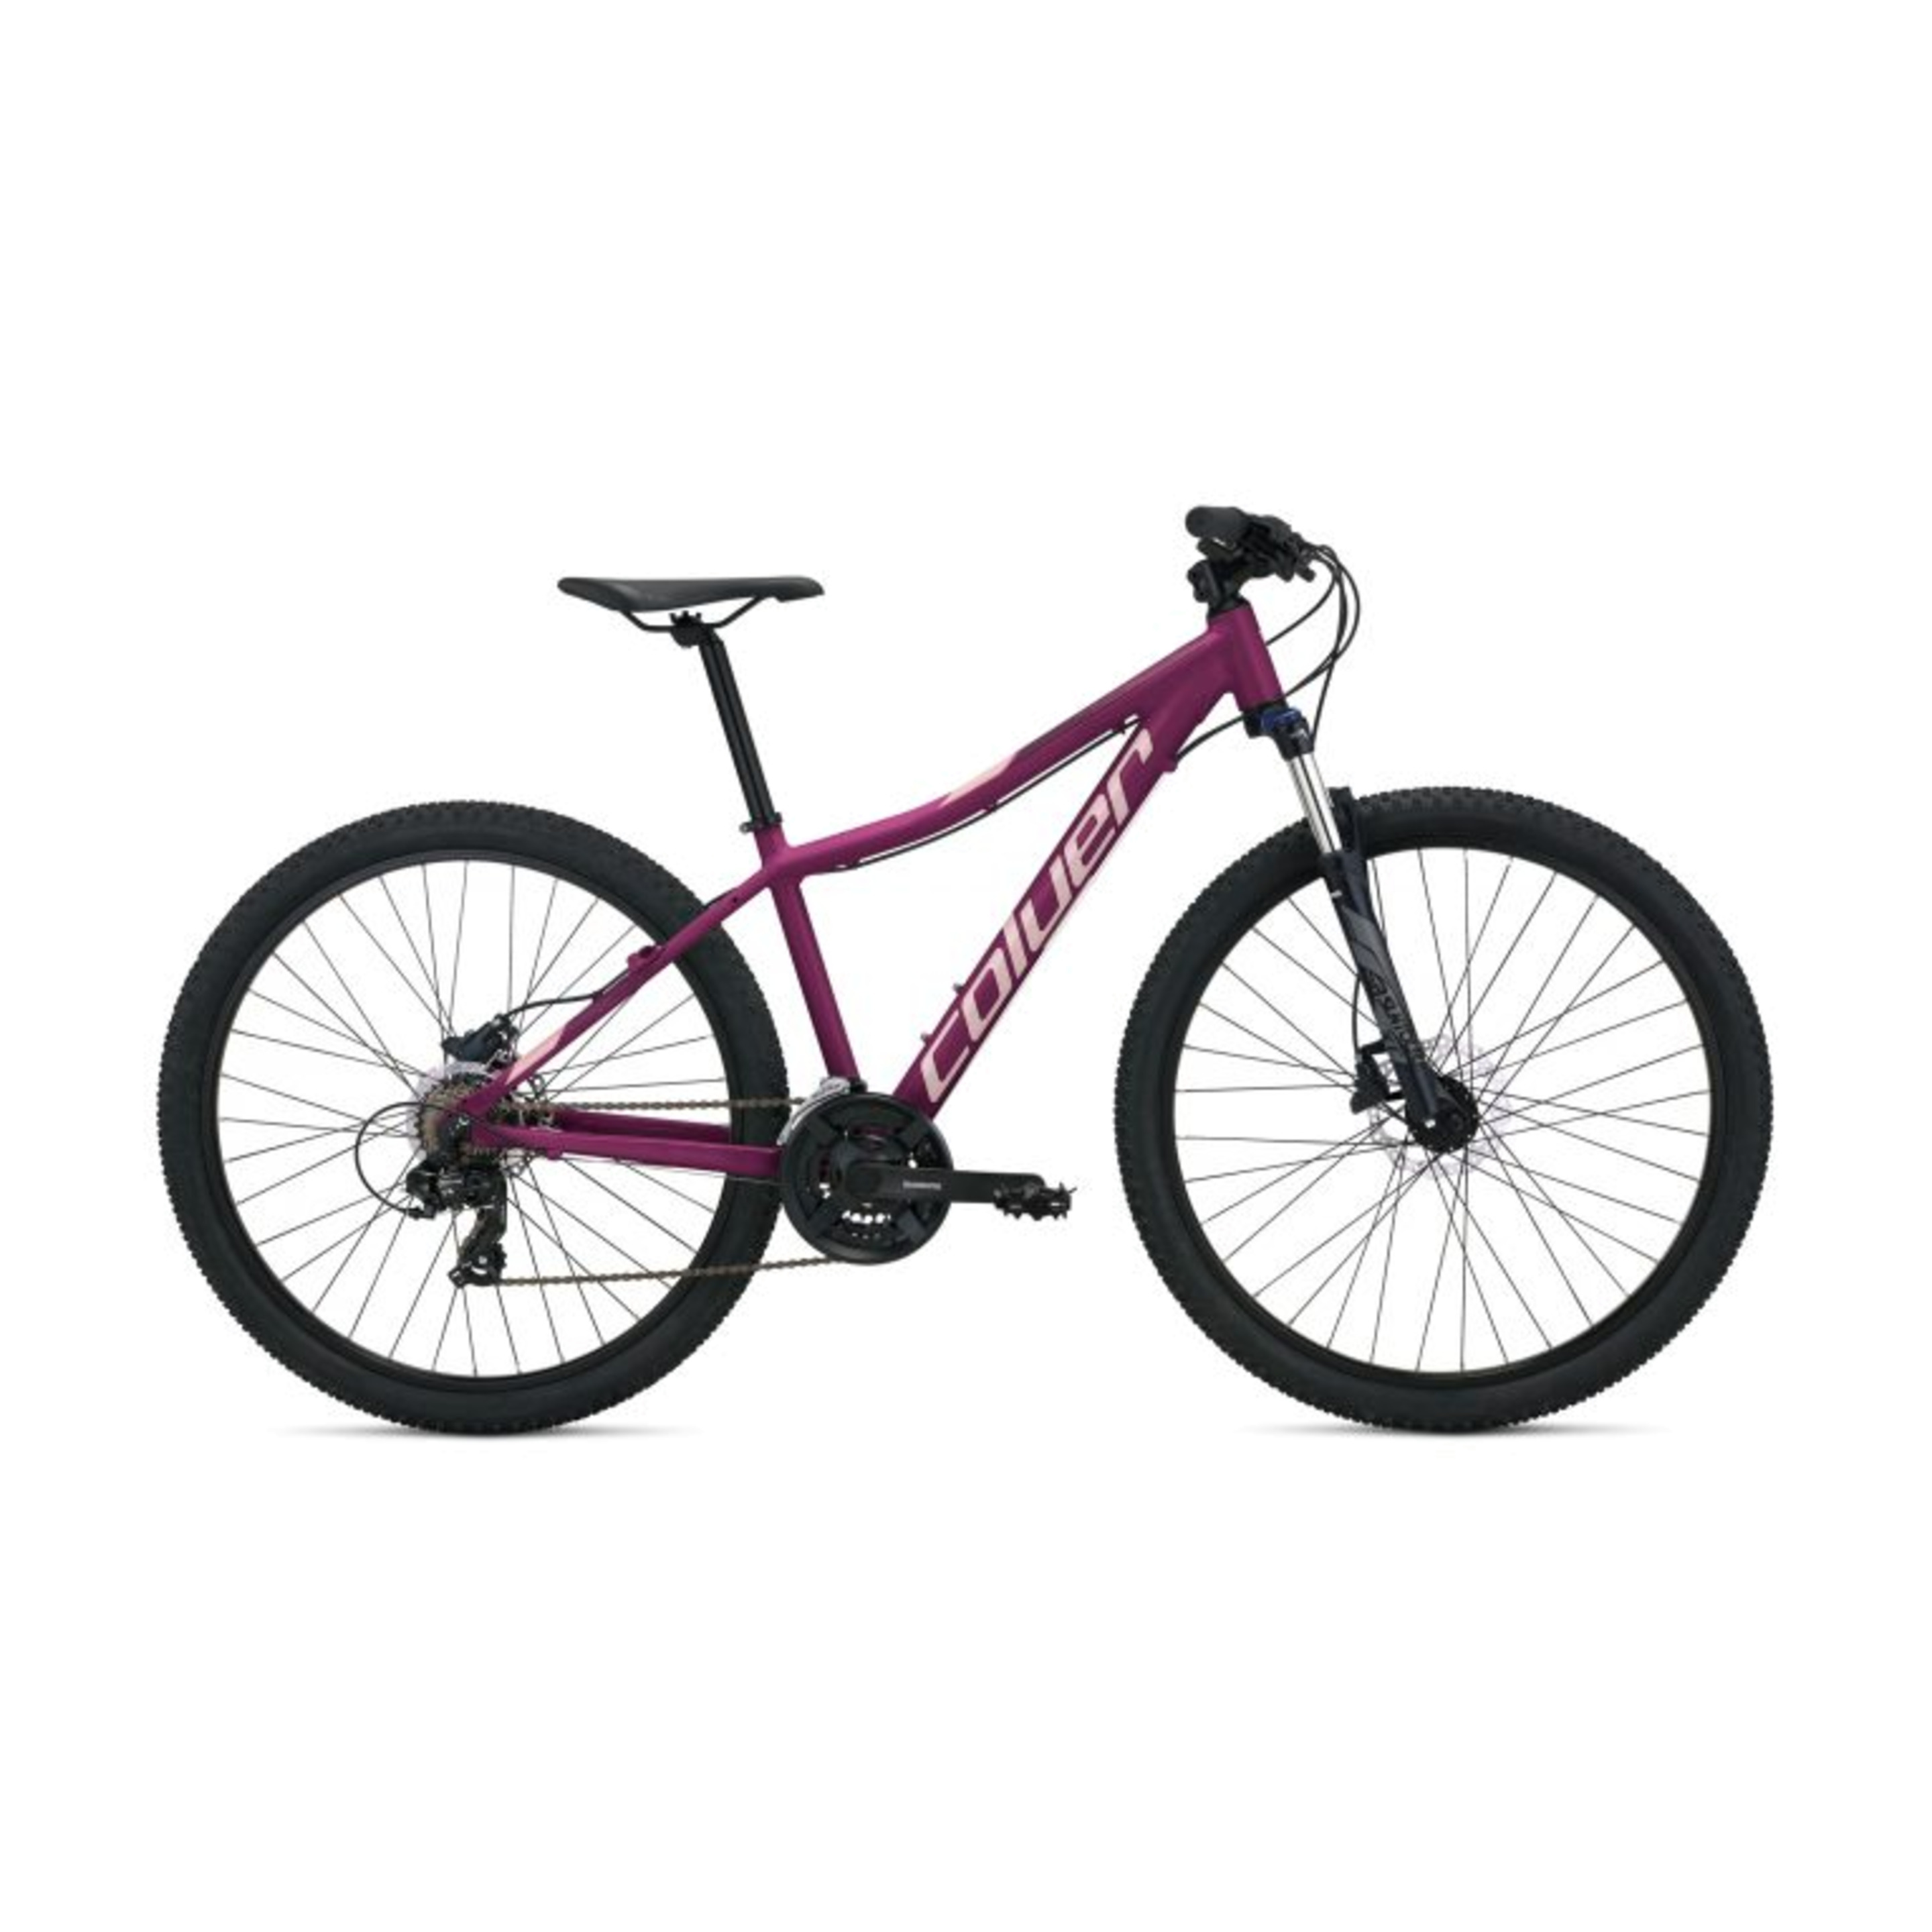 Bicicleta Mtb Coluer Diva 273  Púrpura Talla S